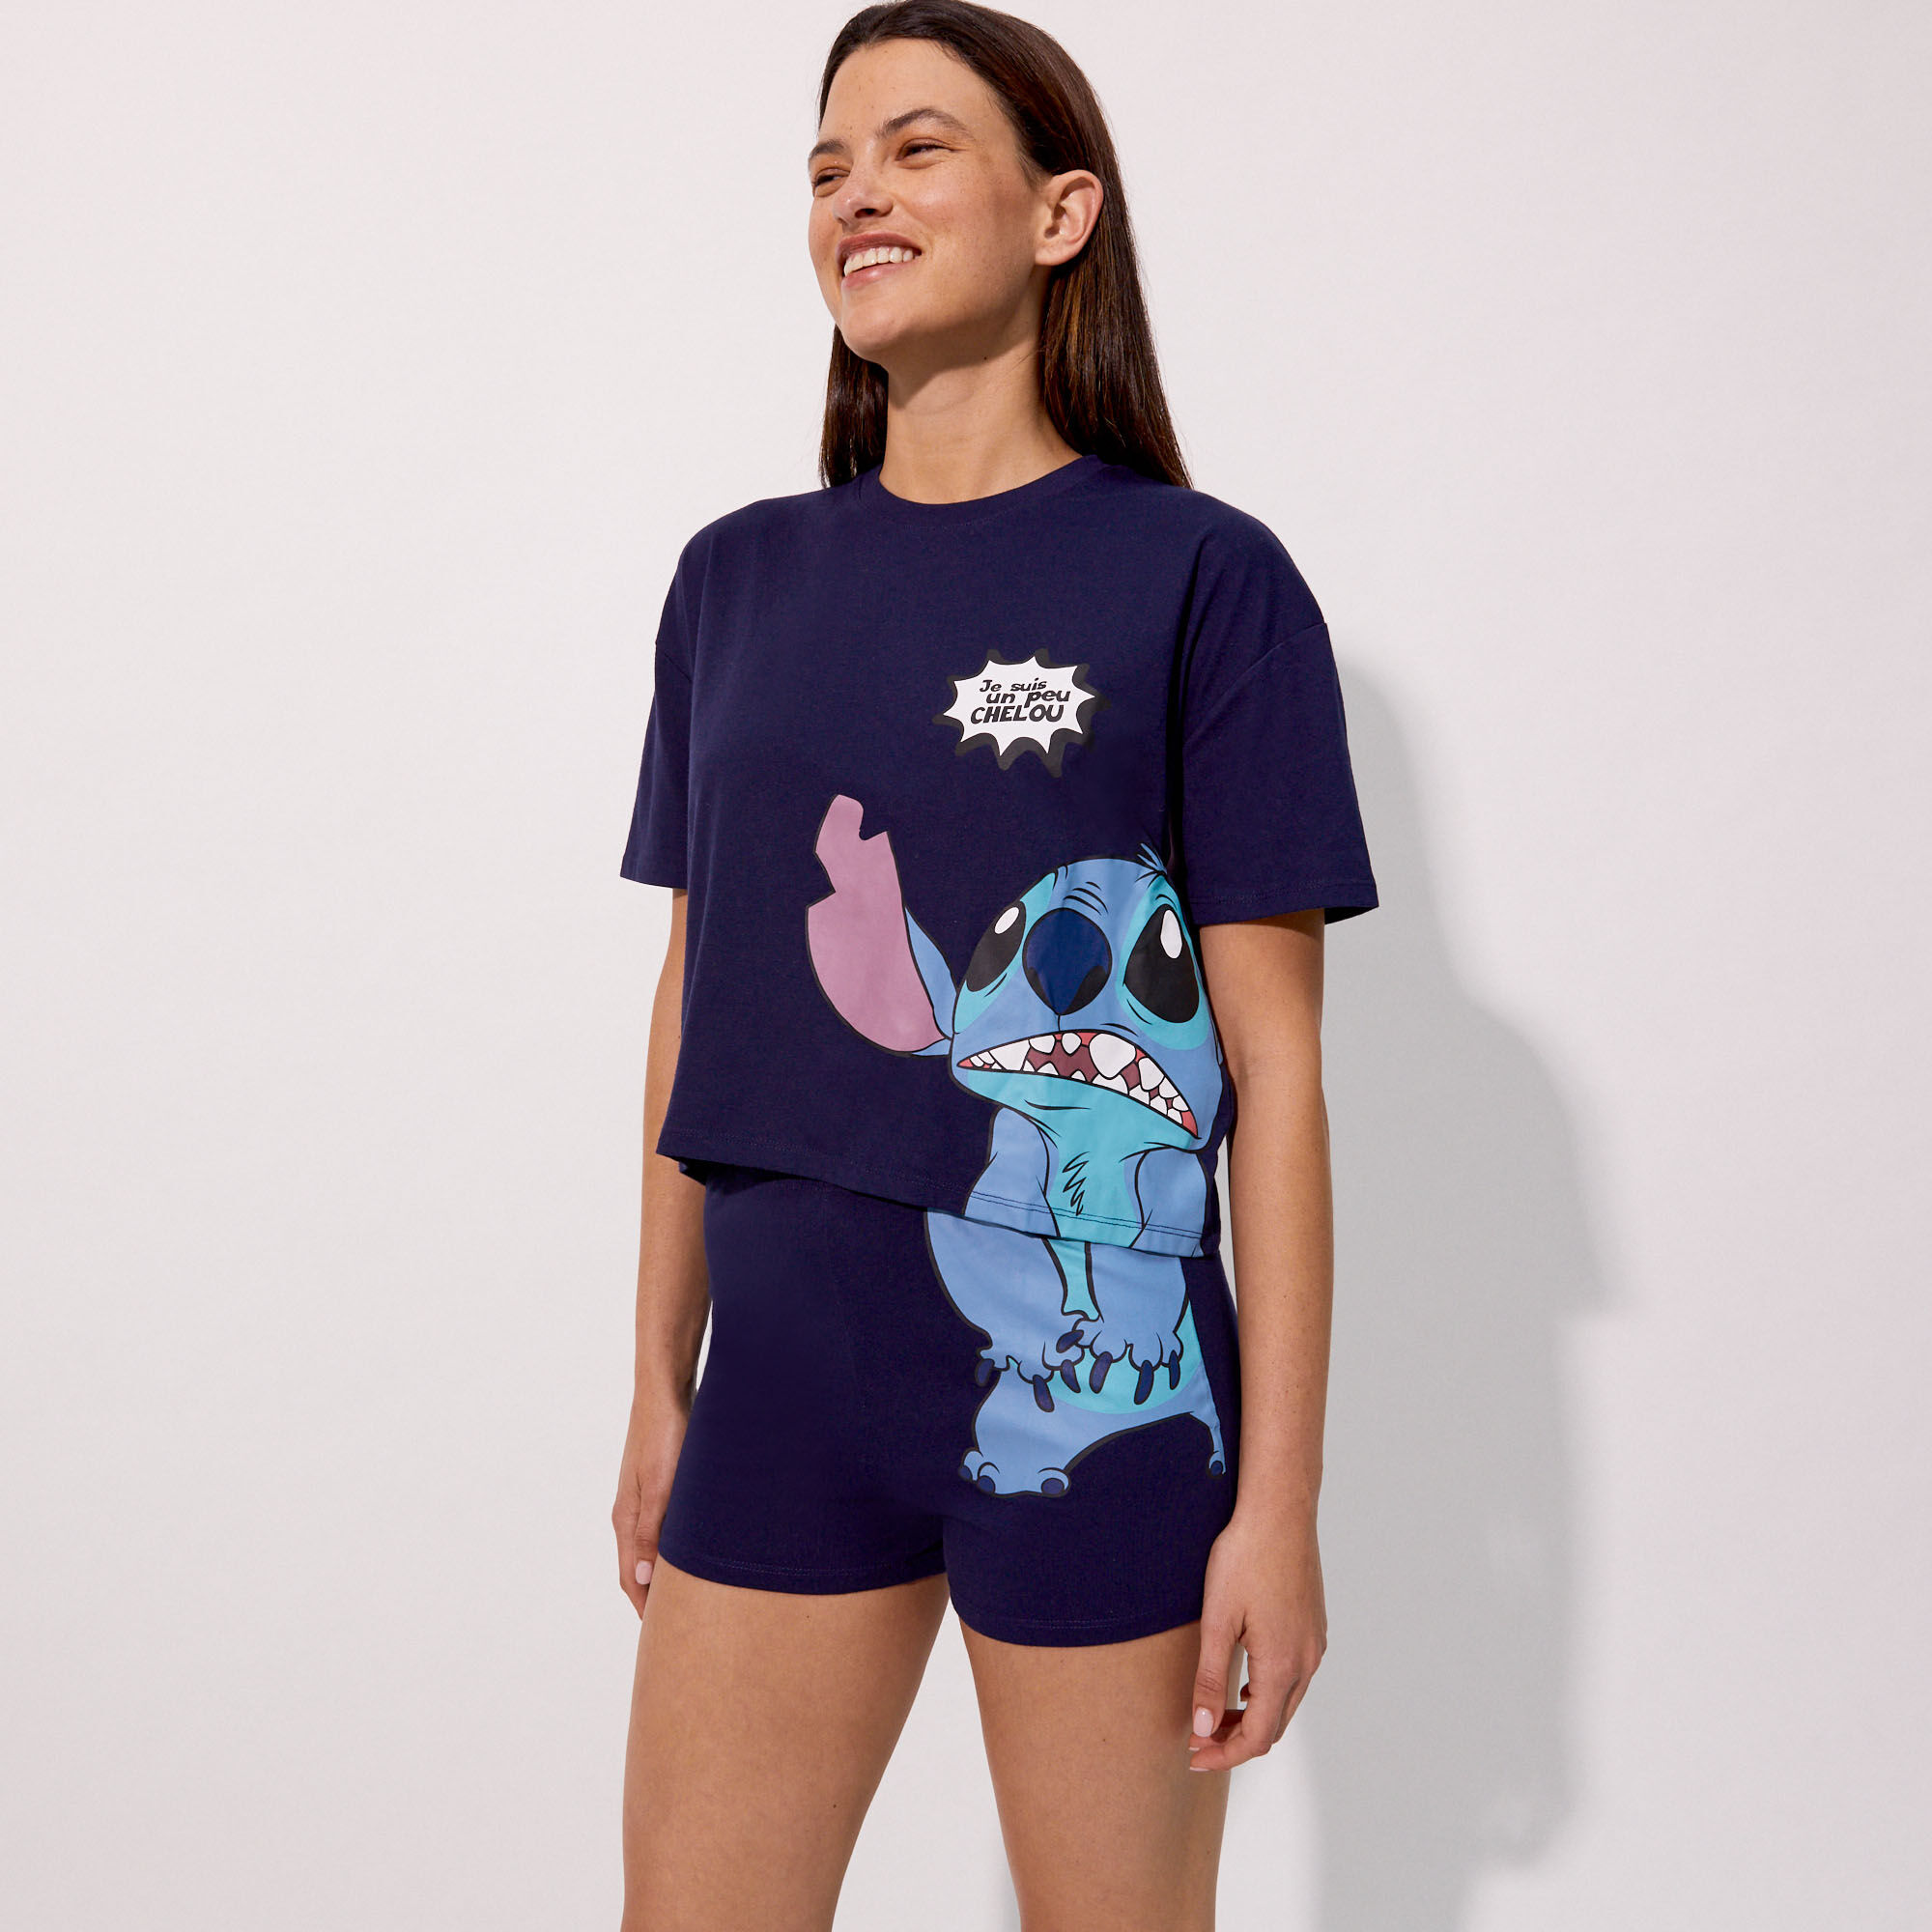 ensemble tee-shirt et culotte stitch - bleu marine - Undiz